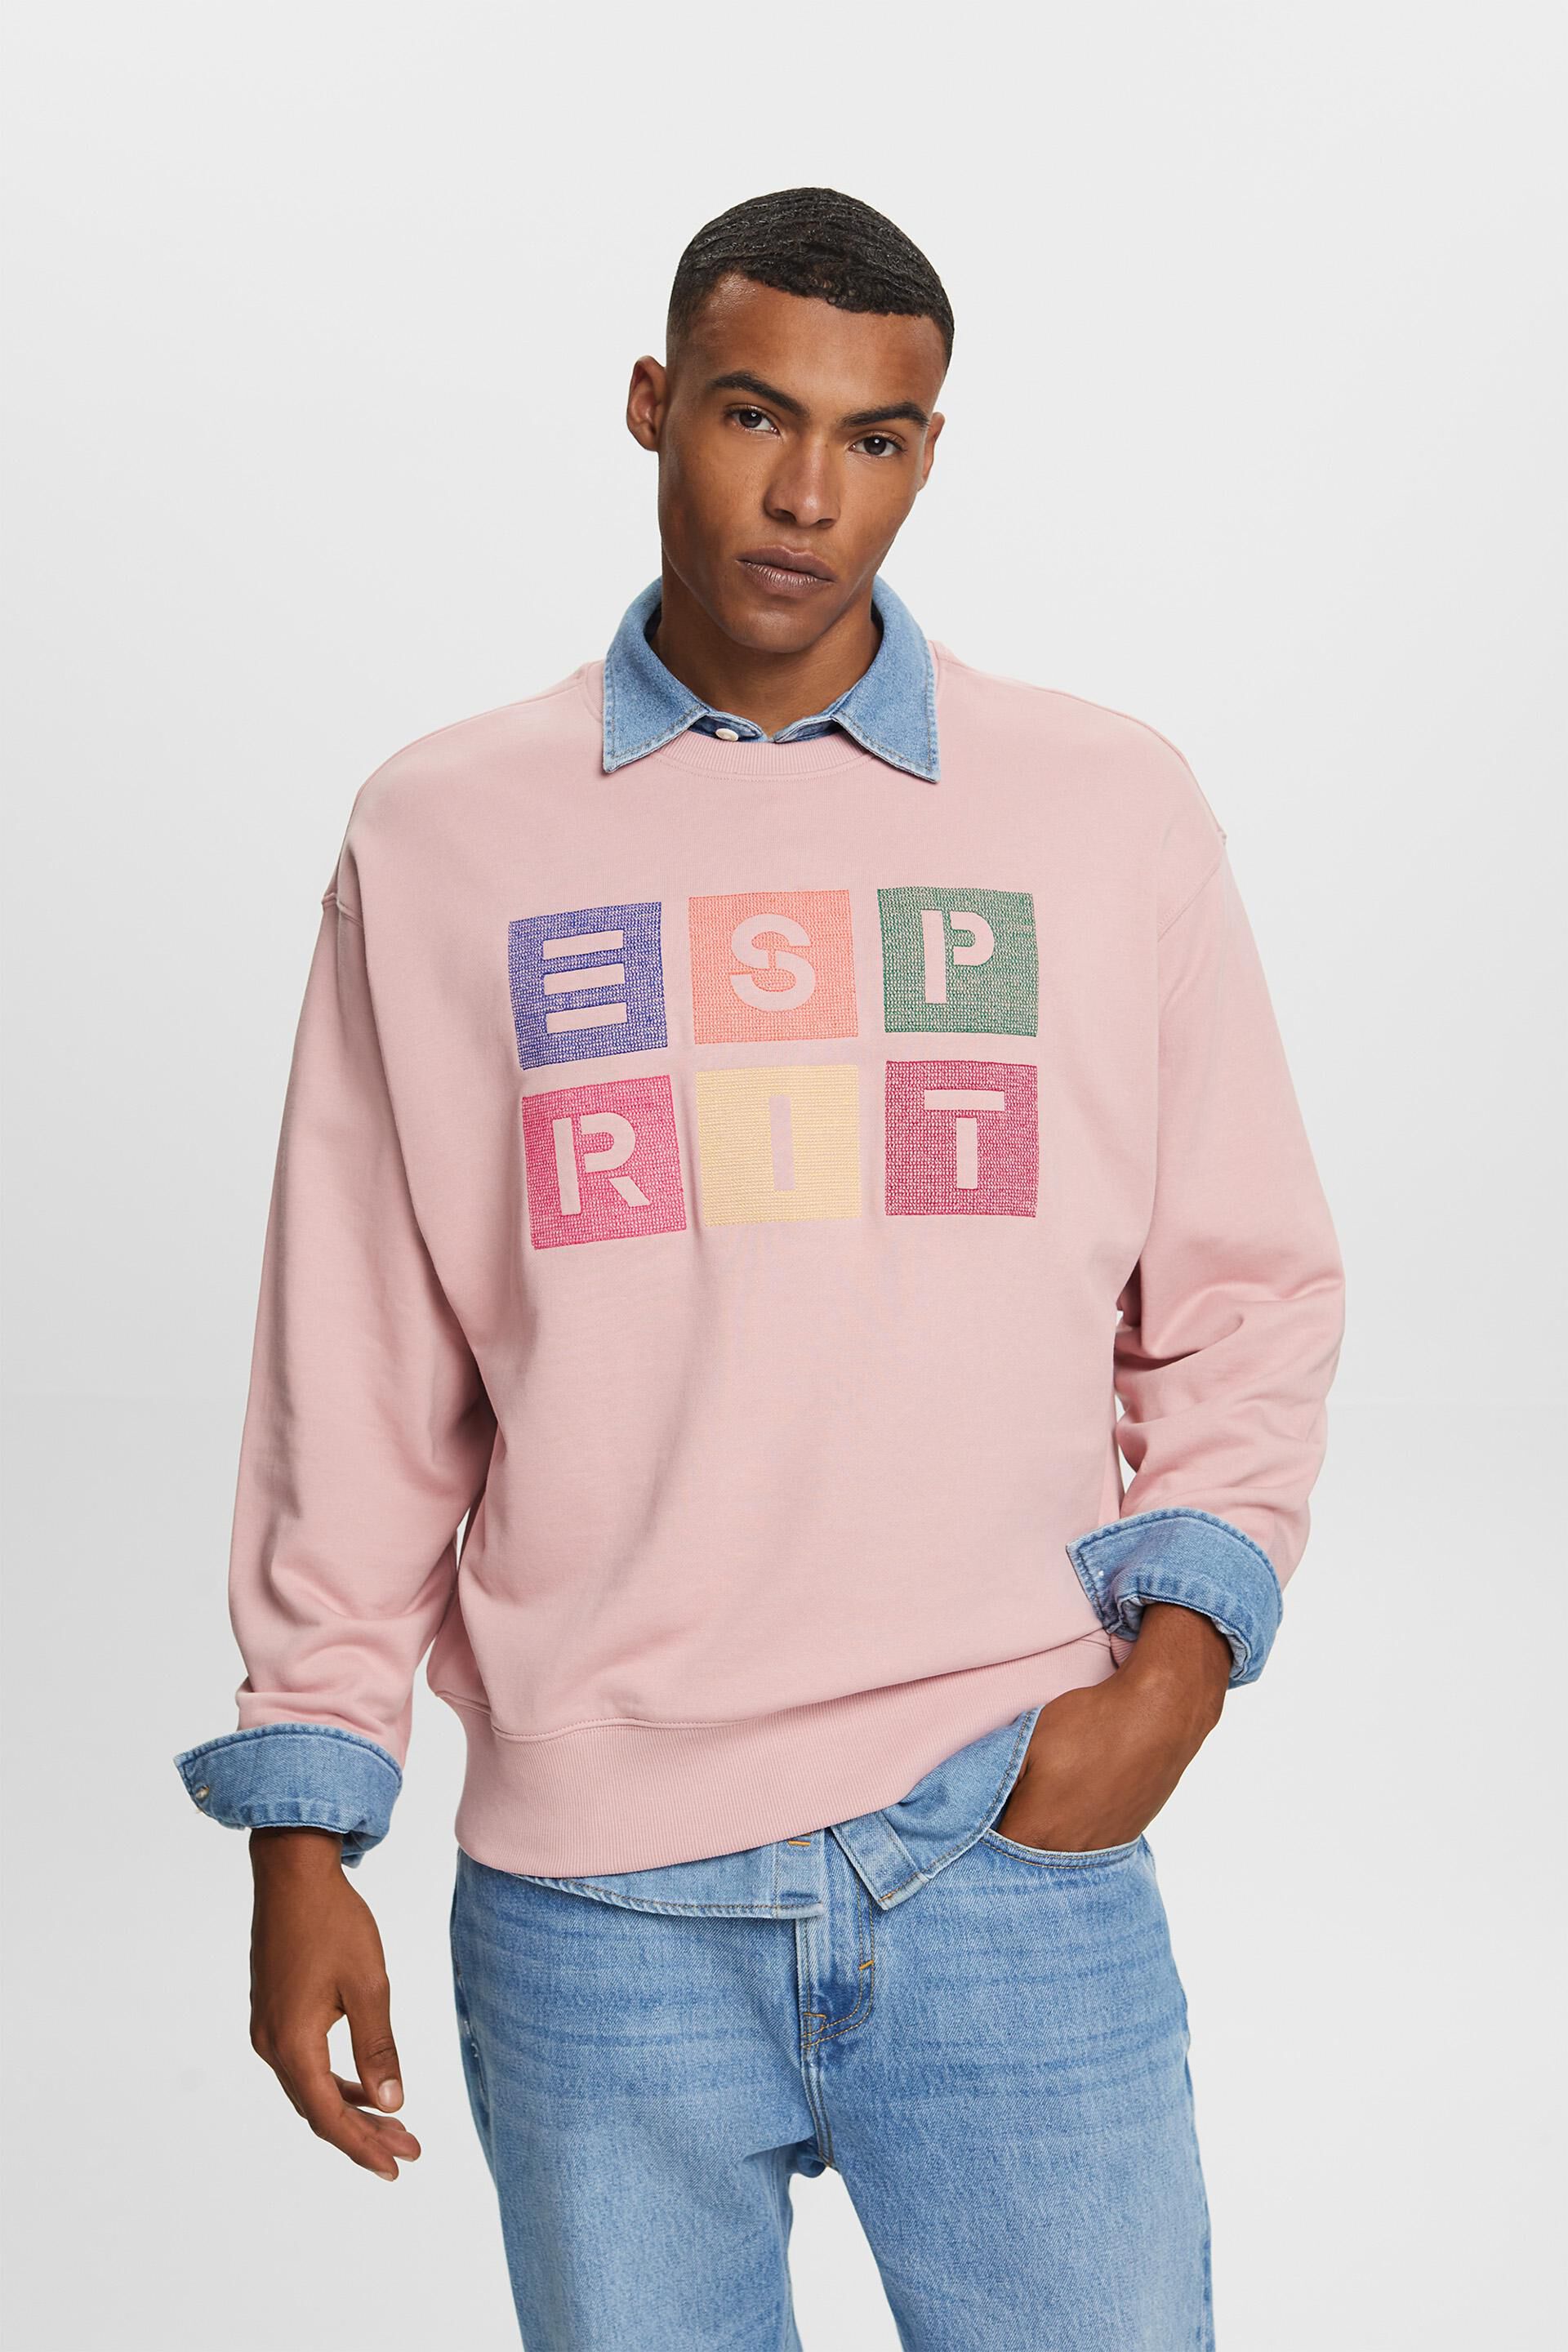 Esprit 100% sweatshirt, organic Logo cotton